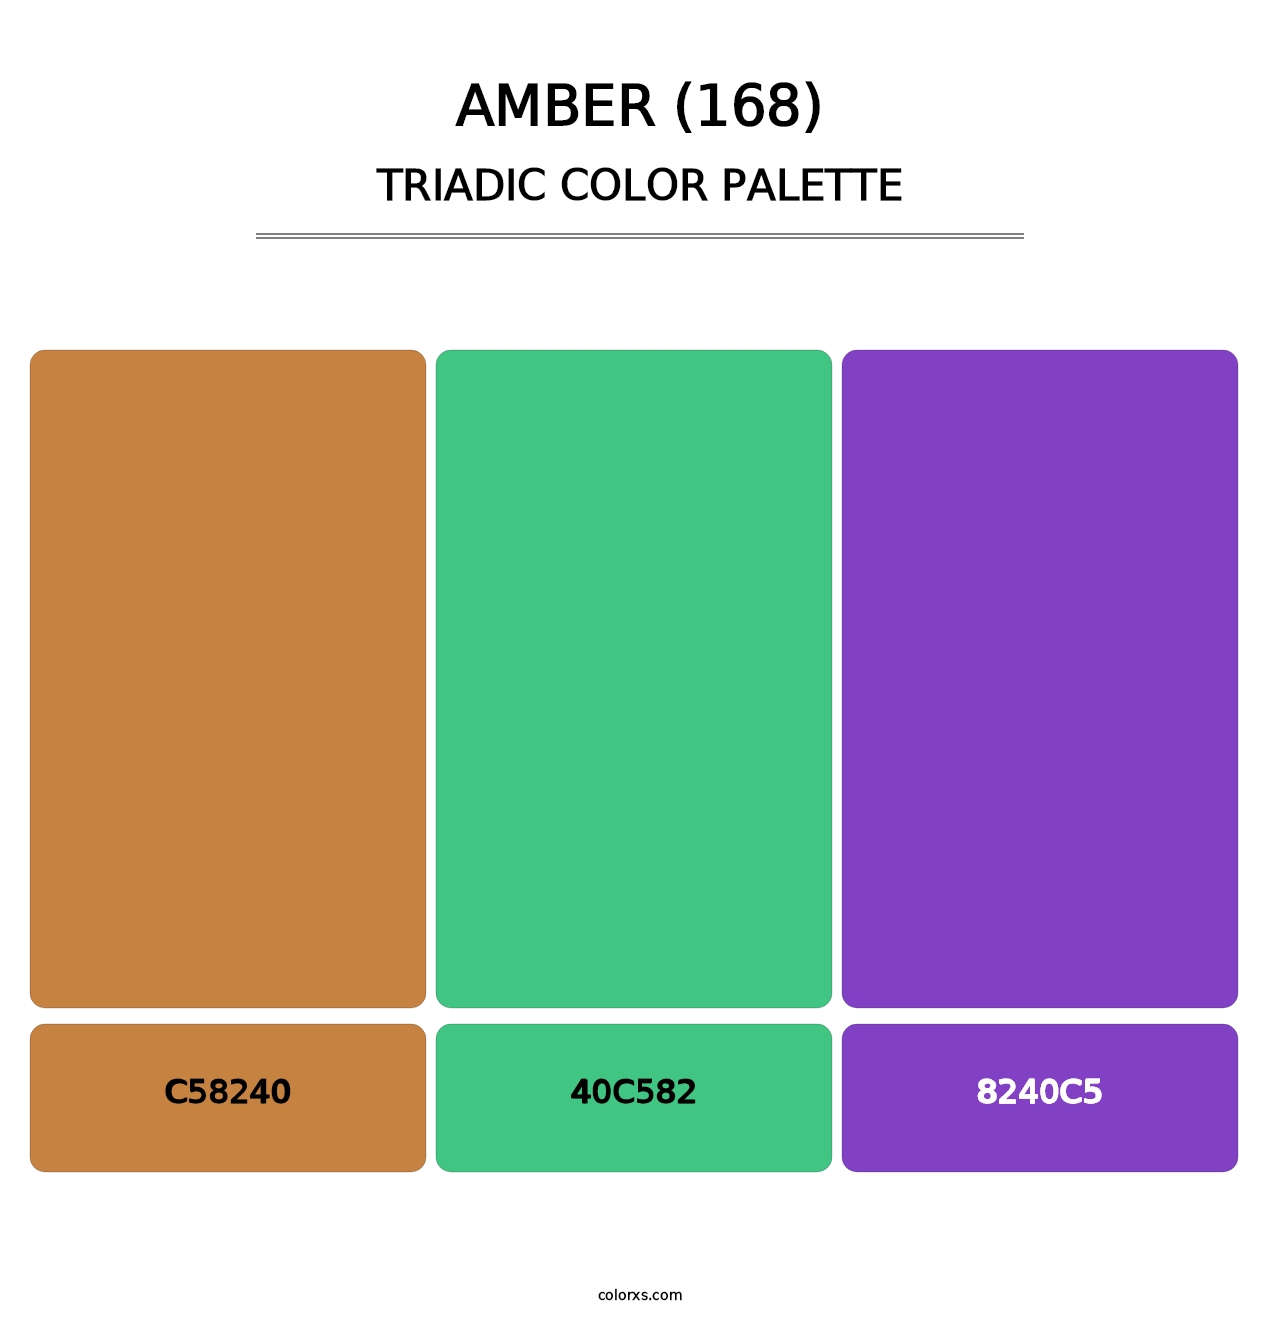 Amber (168) - Triadic Color Palette